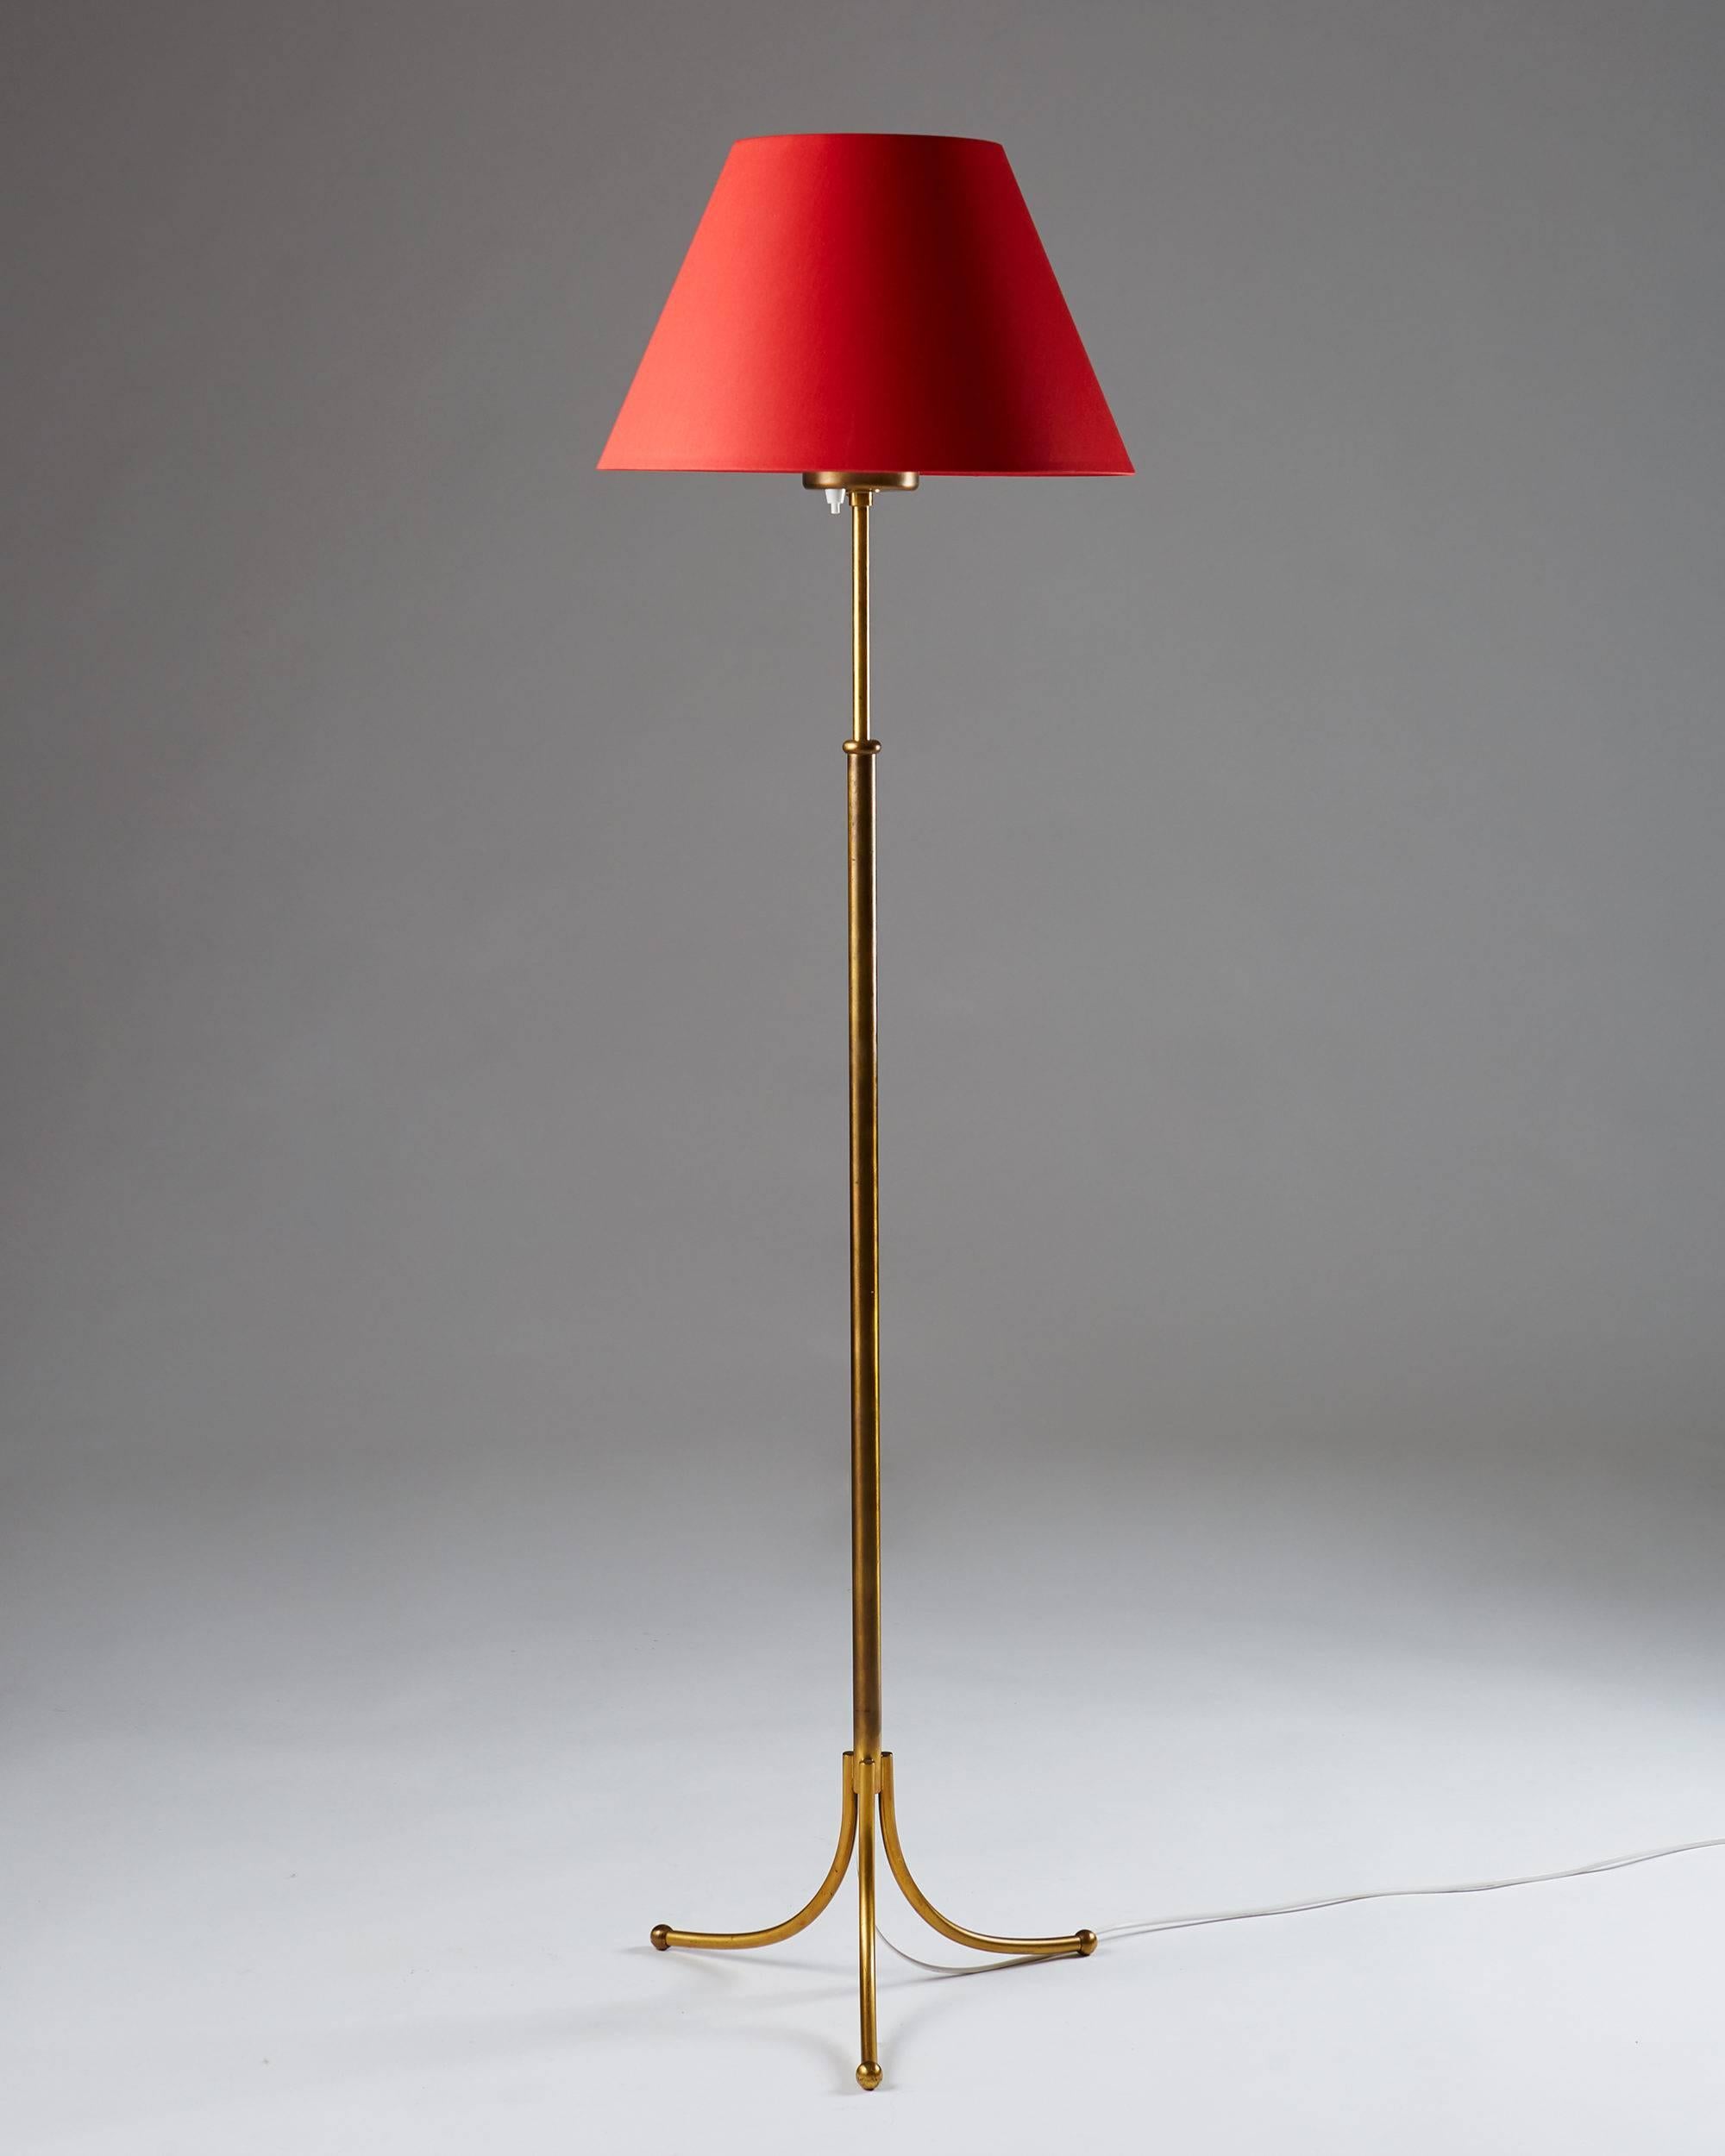 Floor lamp model 2326 designed by Josef Frank for Svenskt Tenn, Sweden, 1950s. Brass and fabric shade.

Measures: Adjustable height 101 -148 cm/ 39 3/4 - 4' 10 ¾”.